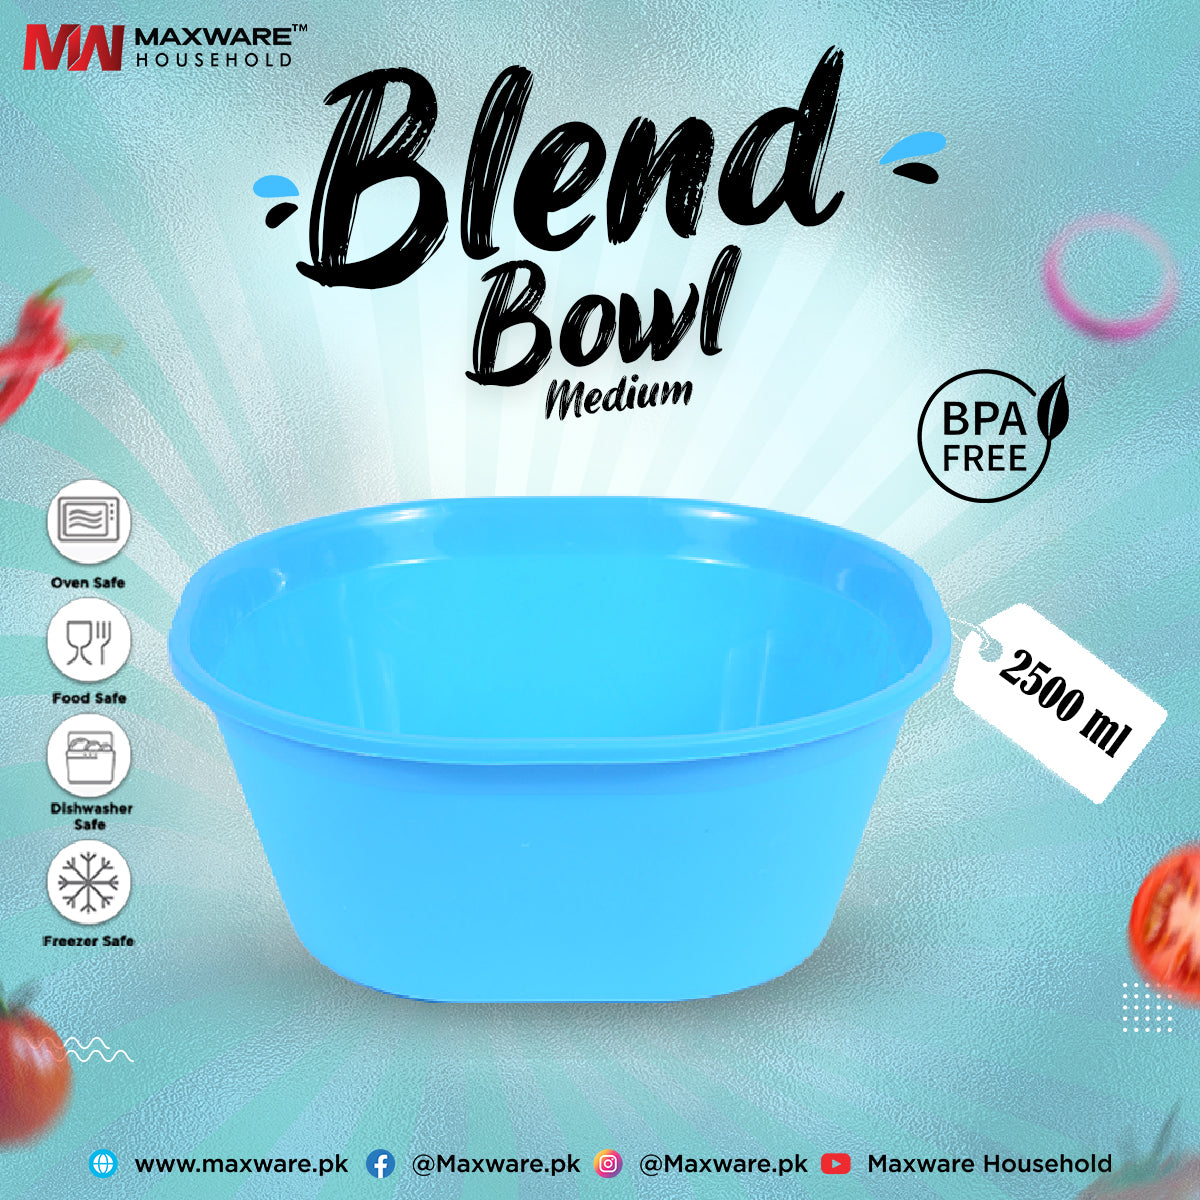 Blend Bowl Medium - Maxwaremart